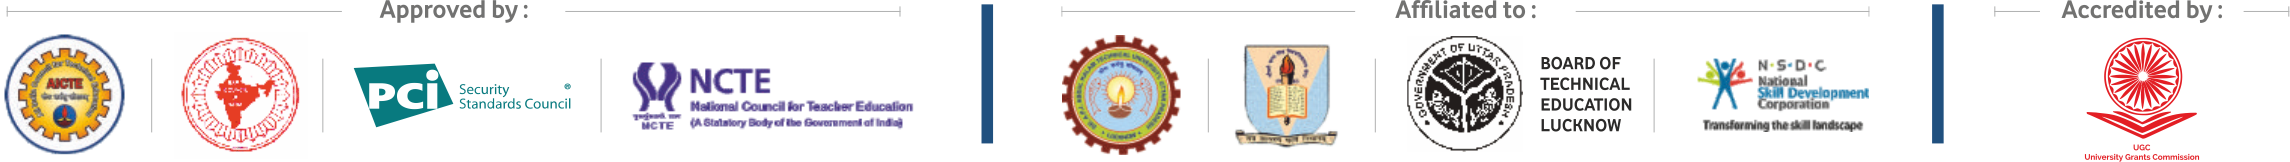 VGI Logo